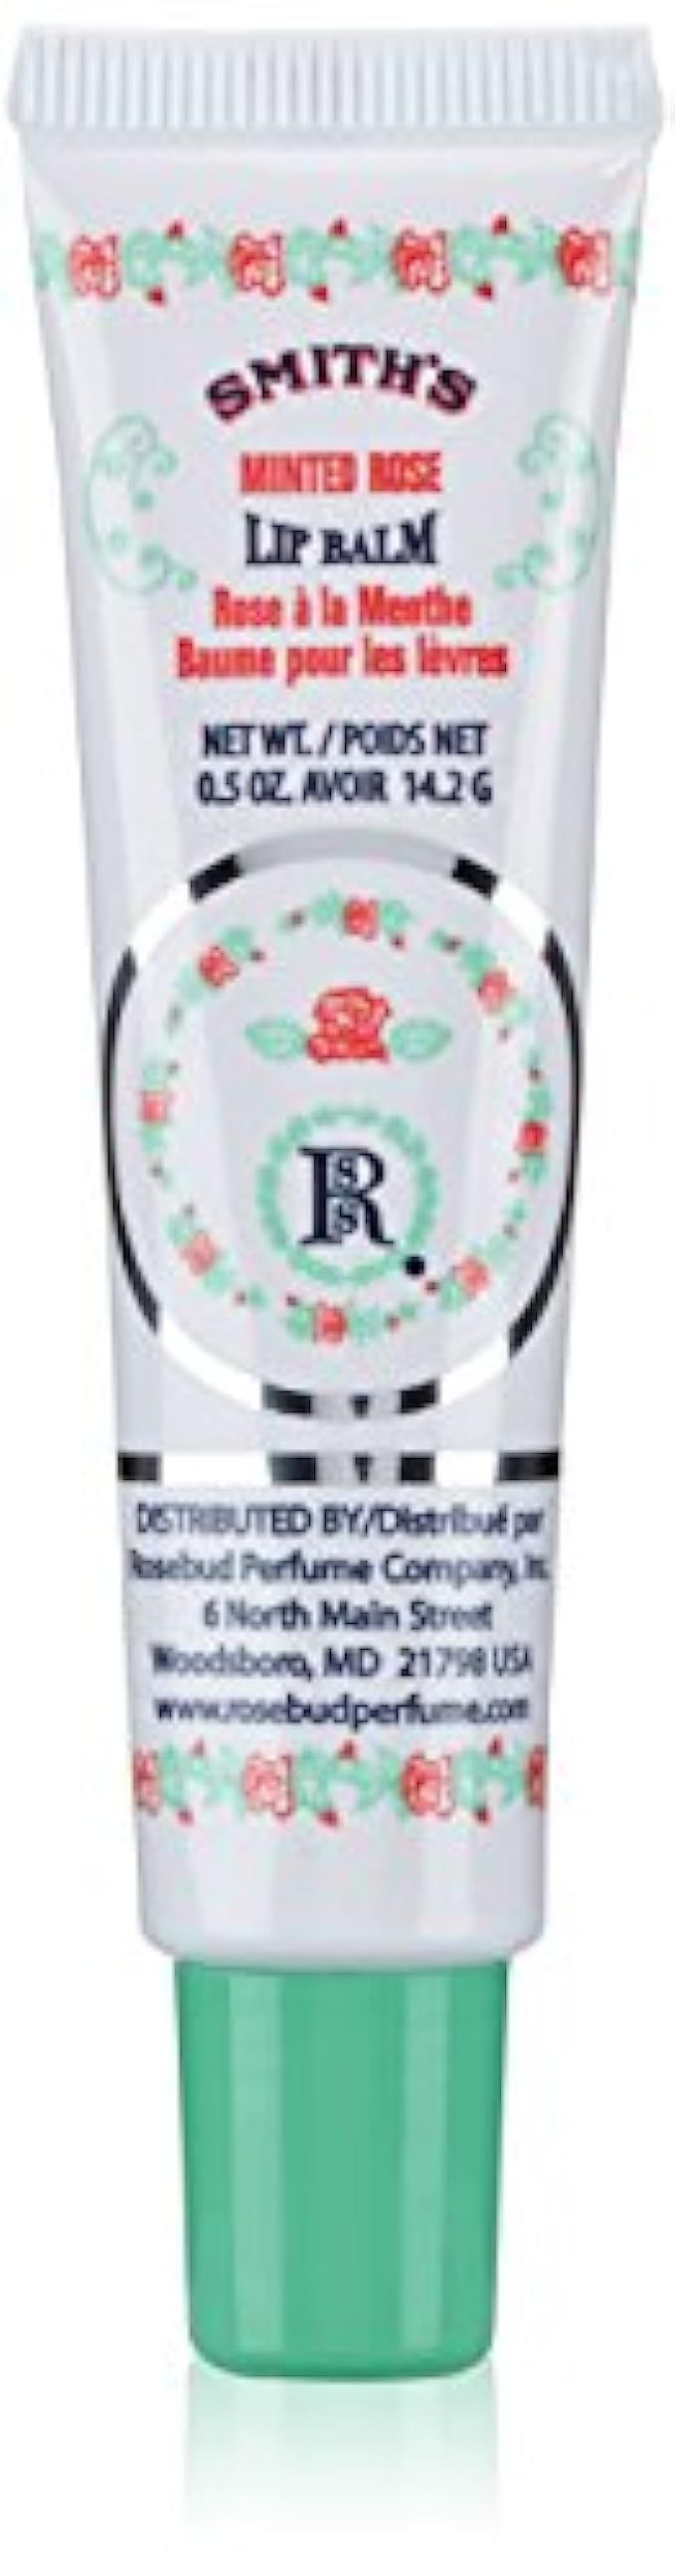 Smith's Rosebud Perfume Co. Minted Rose Lip Balm in a Tube .5 oz | Amazon (US)